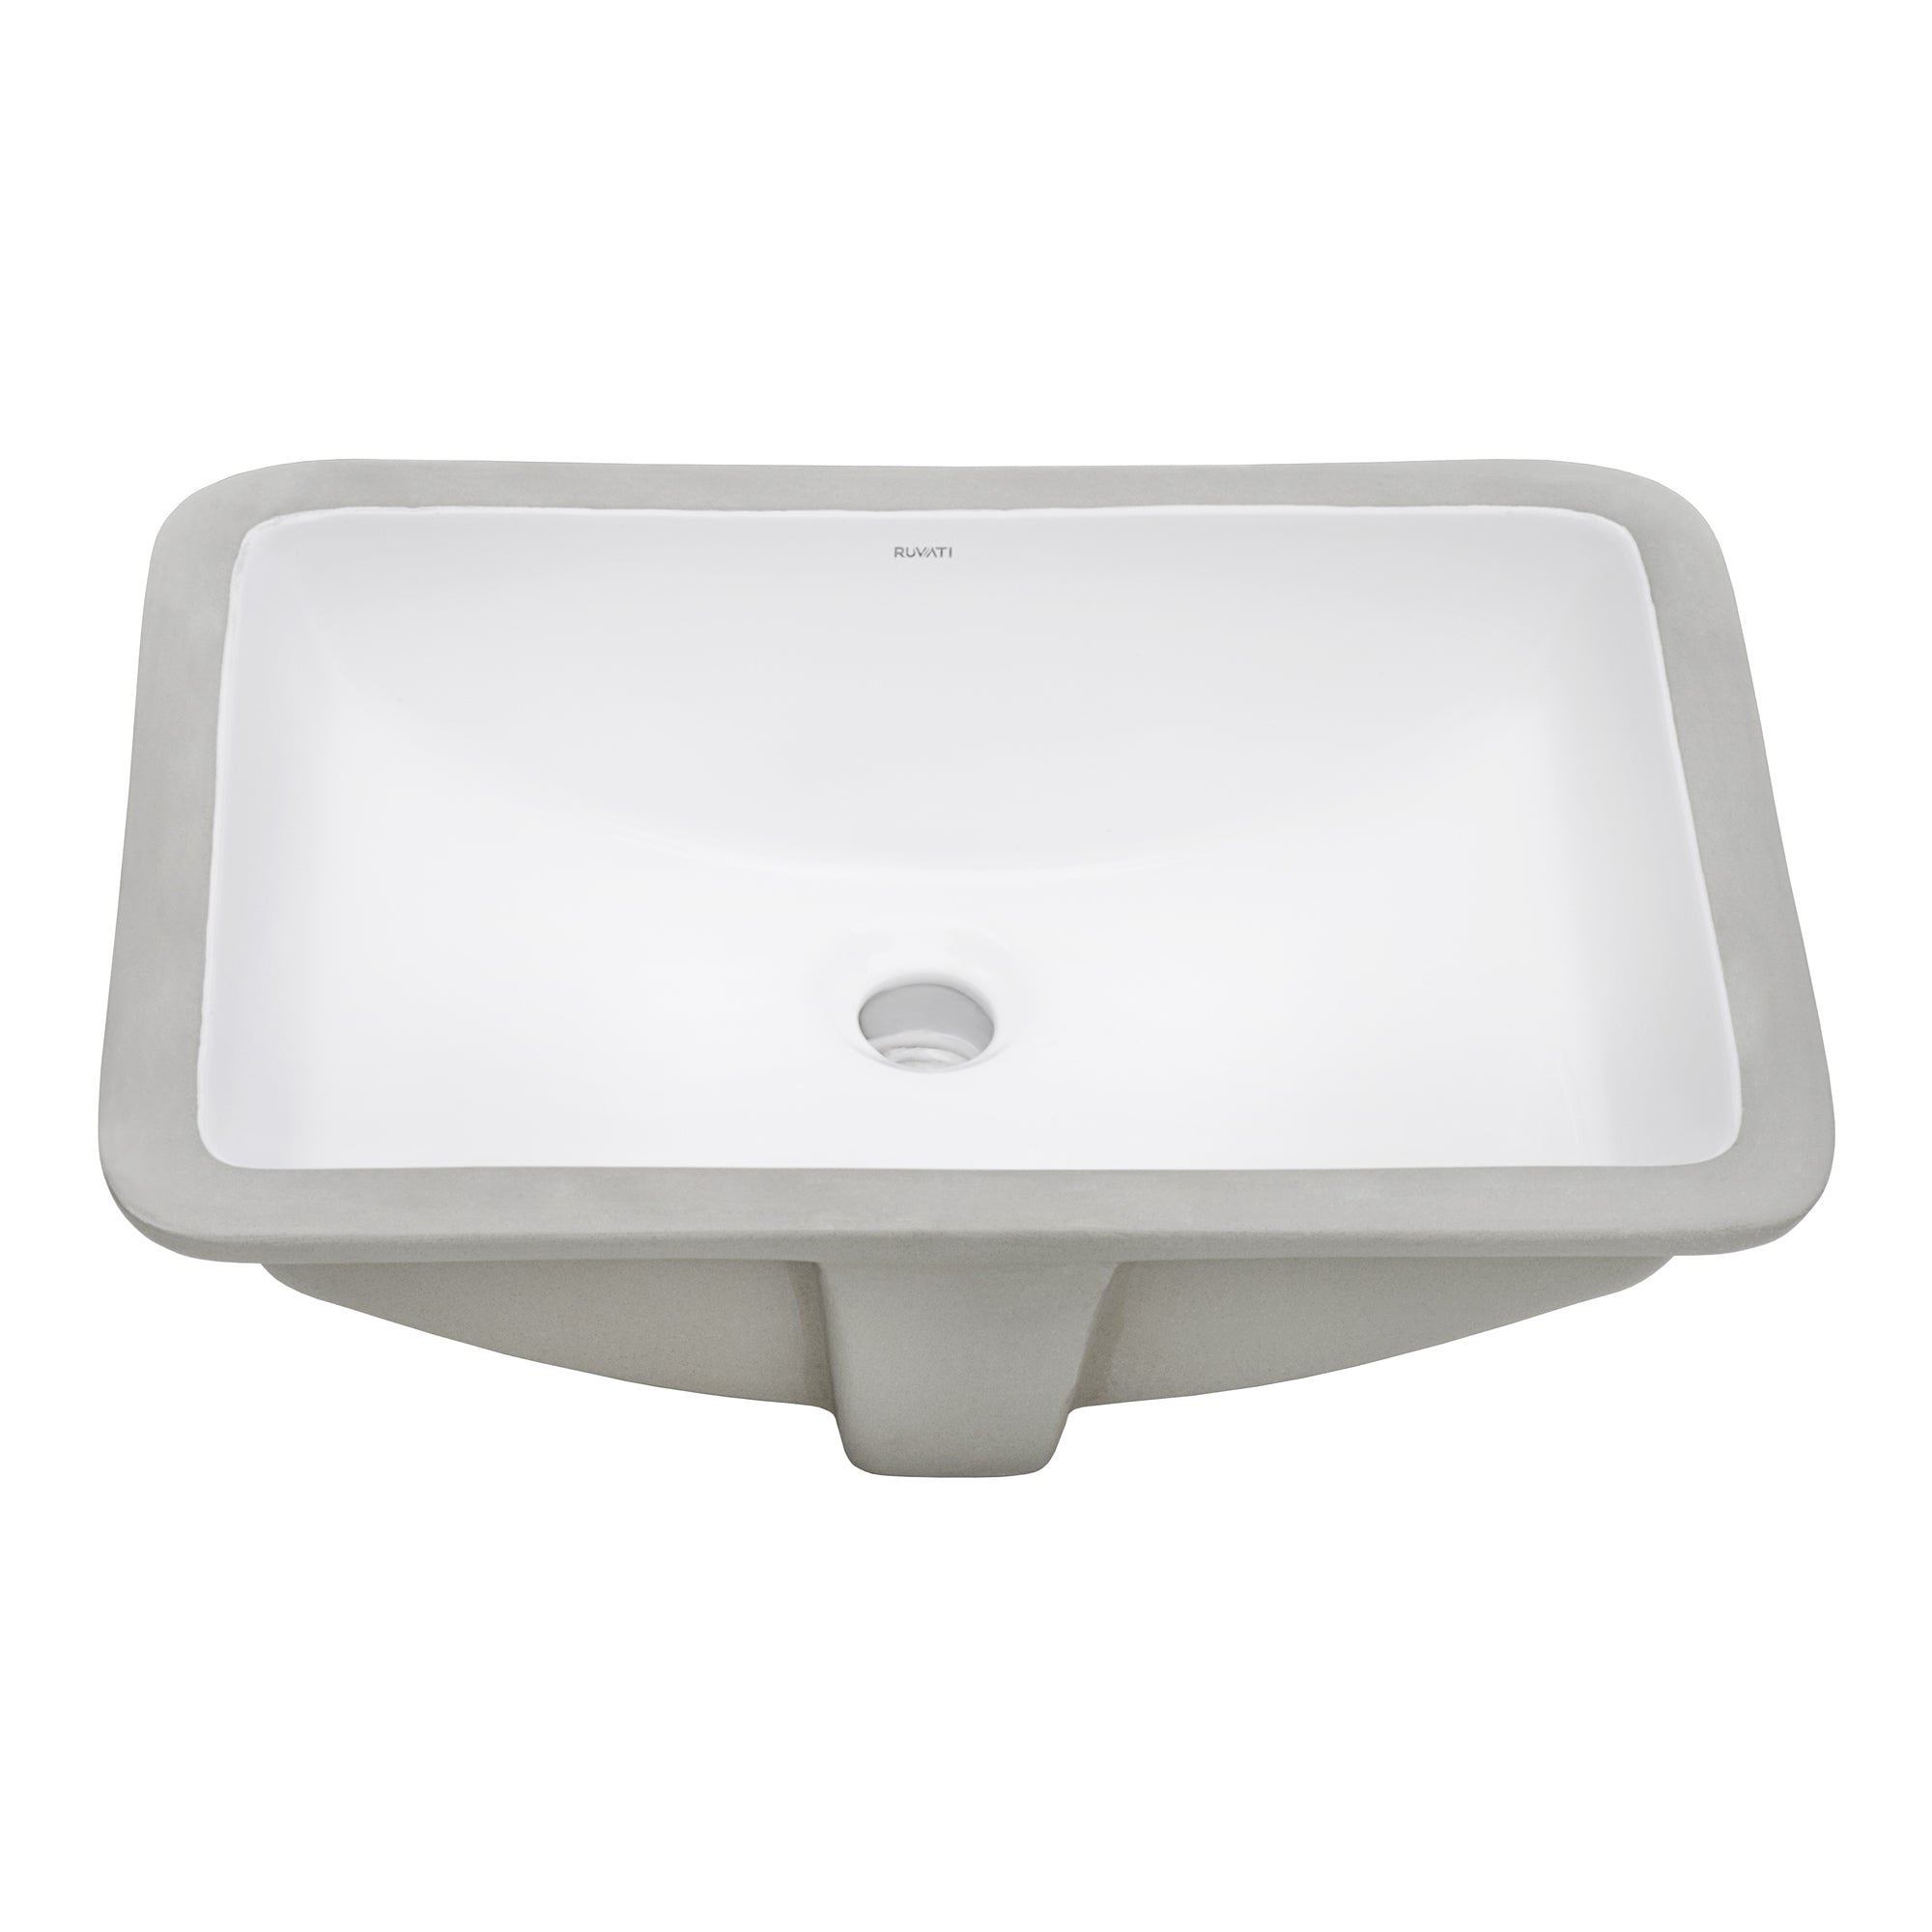 21 x 14 inch Undermount Bathroom Vanity Sink White Rectangular Porcelain Ceramic with Overflow